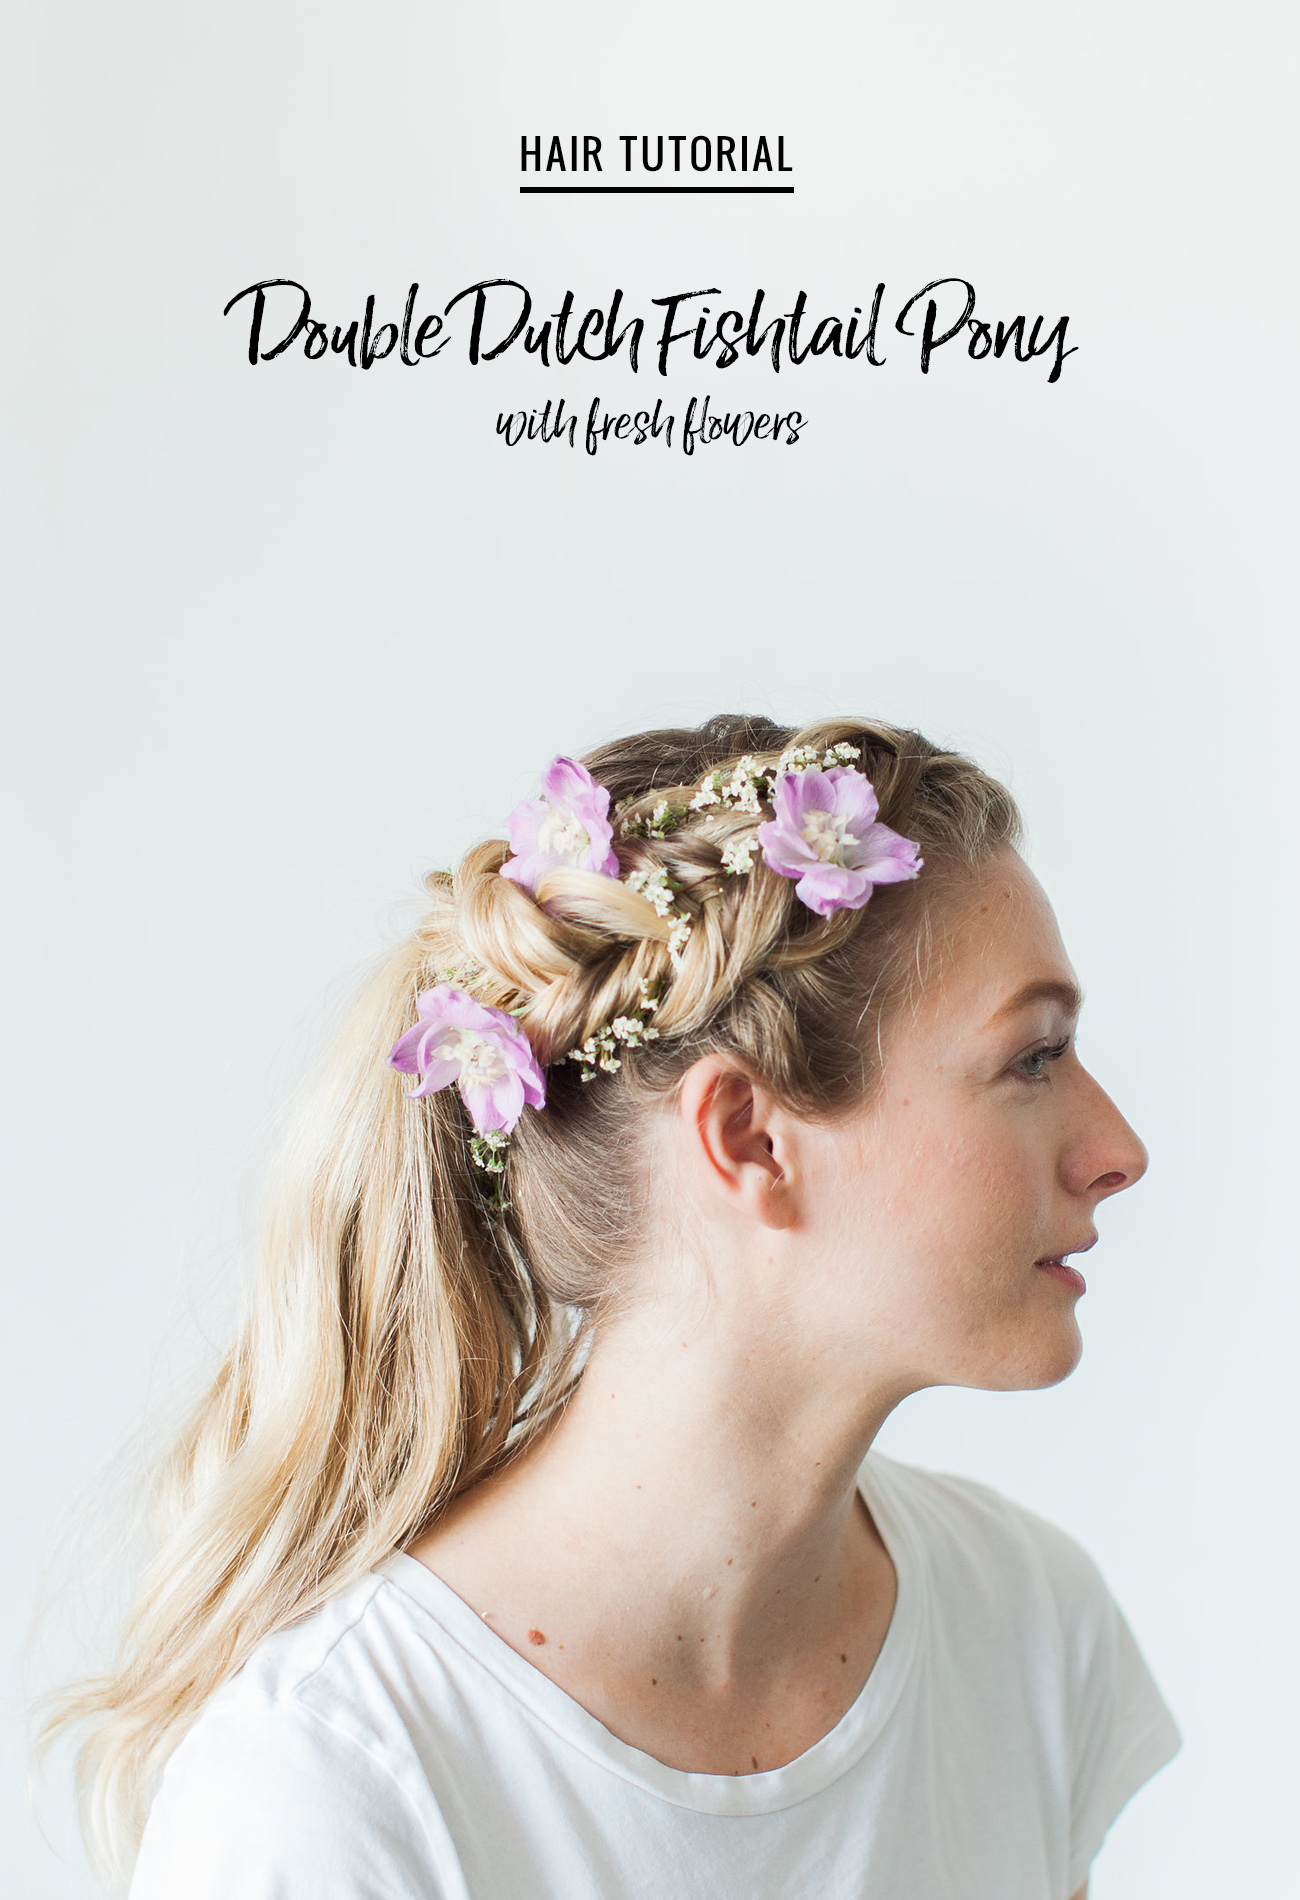 Double Dutch Fishtail Pony